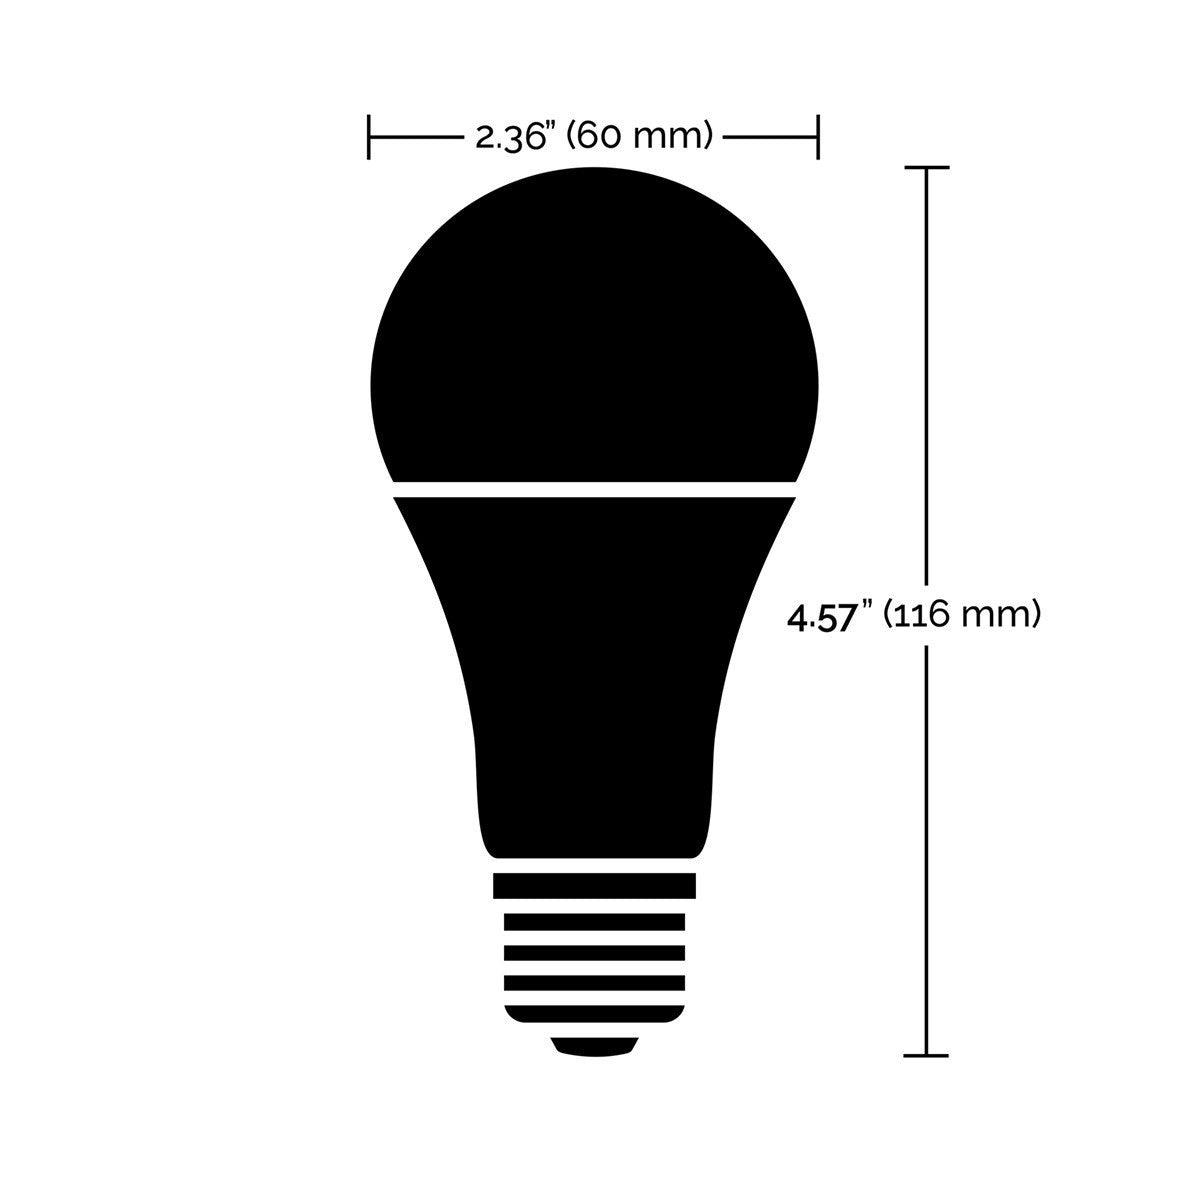 Starfish A19 Wi-Fi Smart LED Bulb, 9.5 Watts, 800 Lumens, 27K/30K/40K/50K, Tunable White, 2 per Box - Bees Lighting